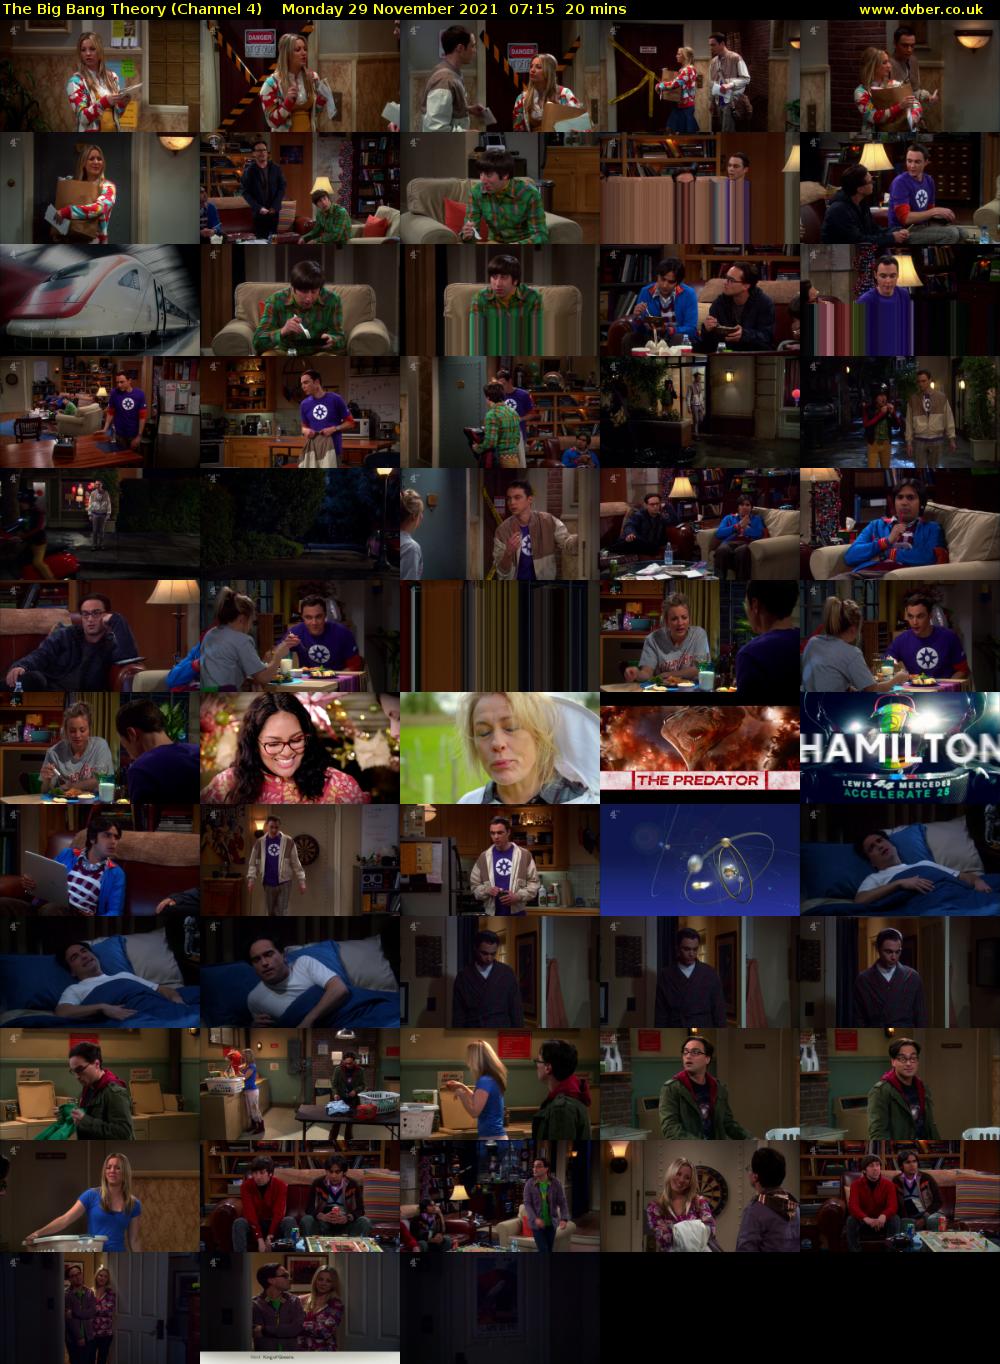 The Big Bang Theory (Channel 4) Monday 29 November 2021 07:15 - 07:35